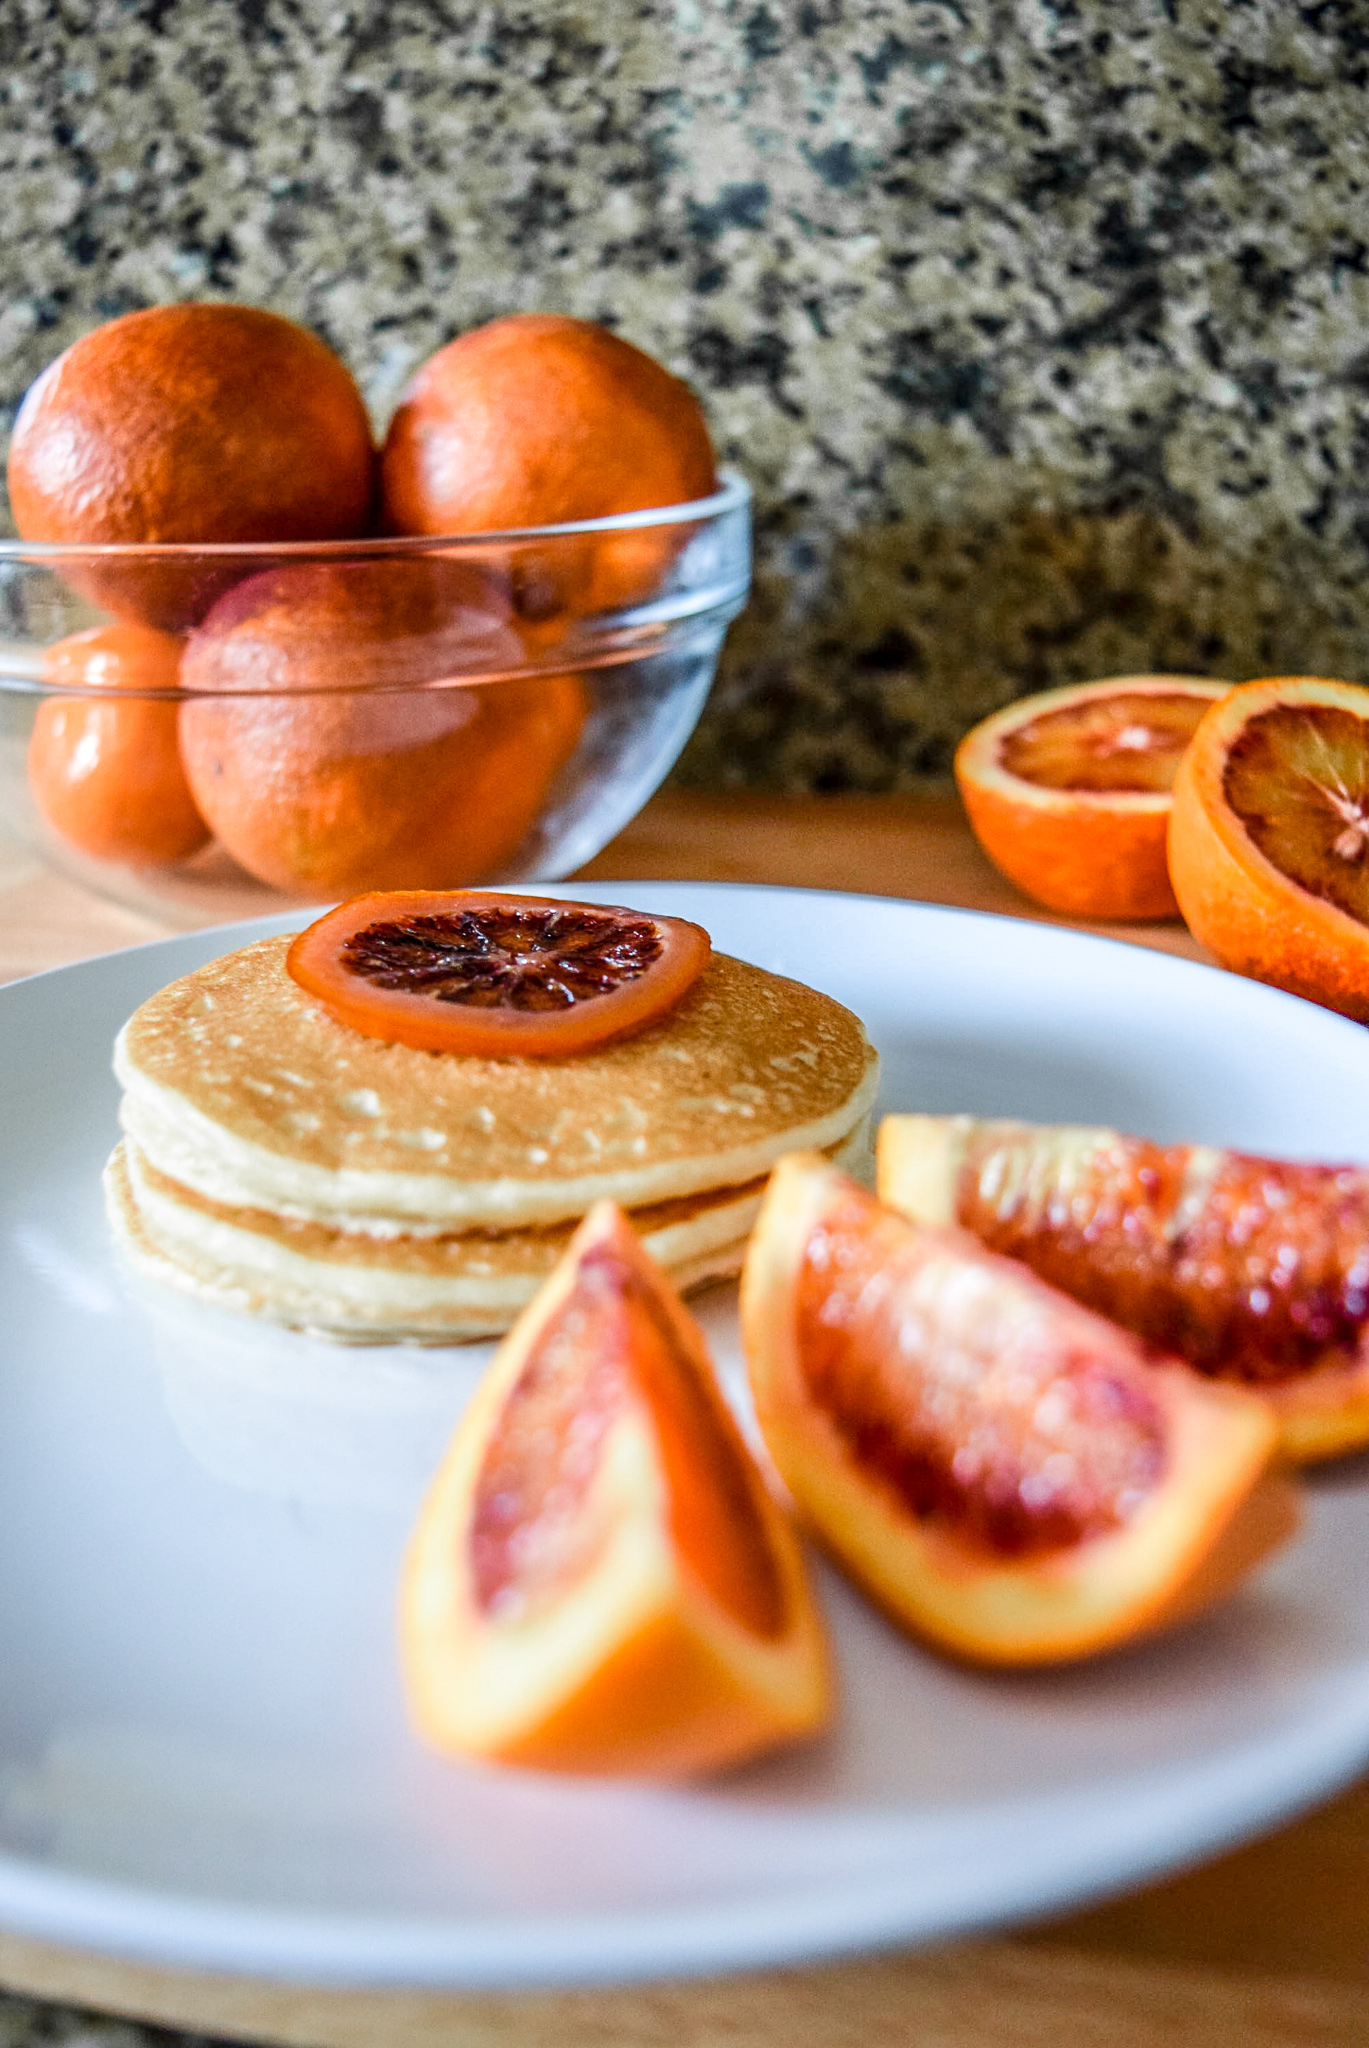 Trader Joe’s frozen pancakes with blood orange slices and candied blood orange round garnish from front